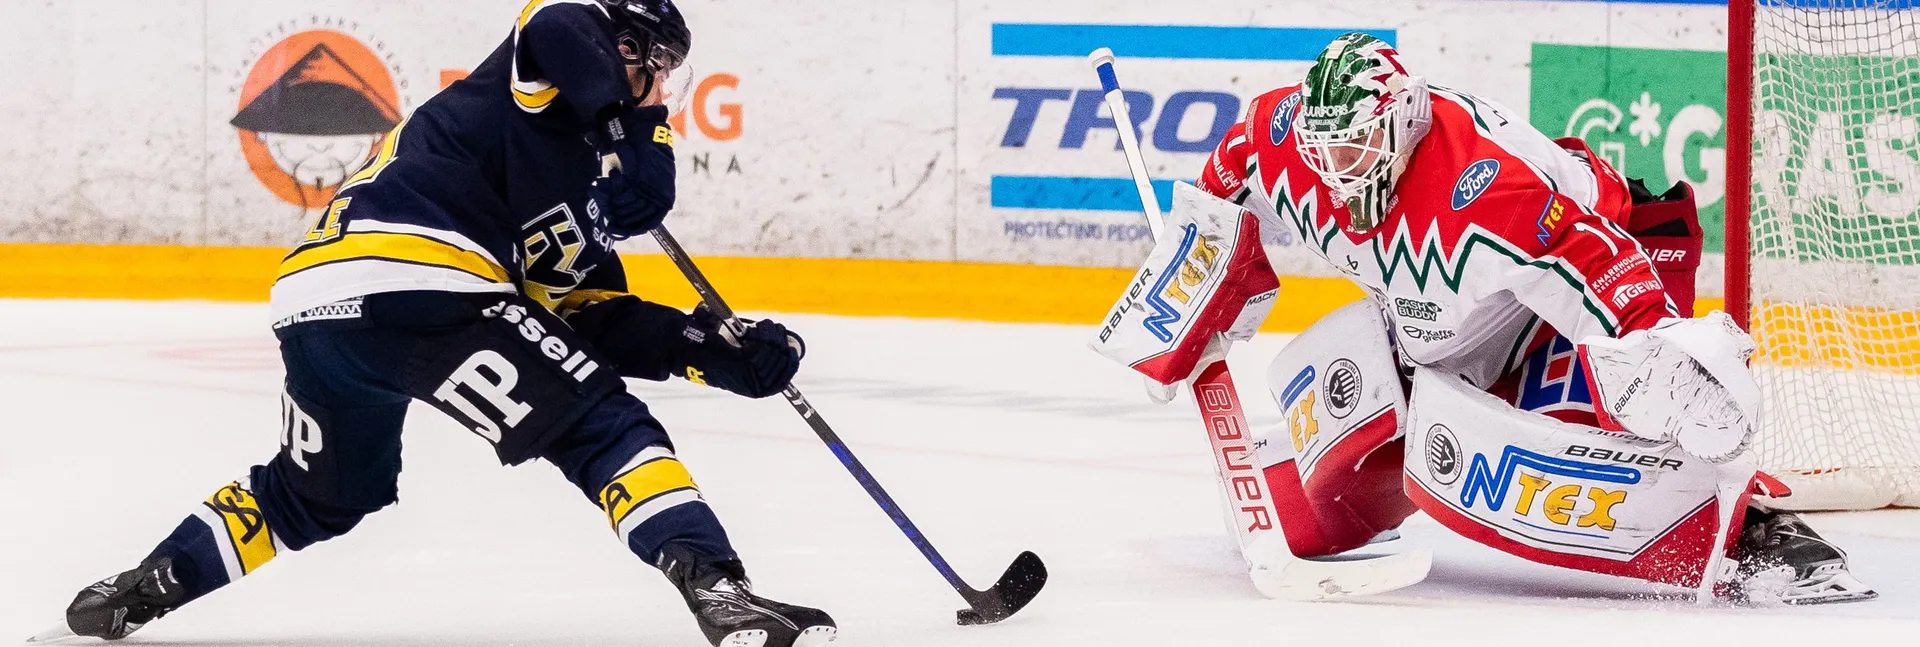 Ishockeymatch mellan Frölunda och HV71 i SHL